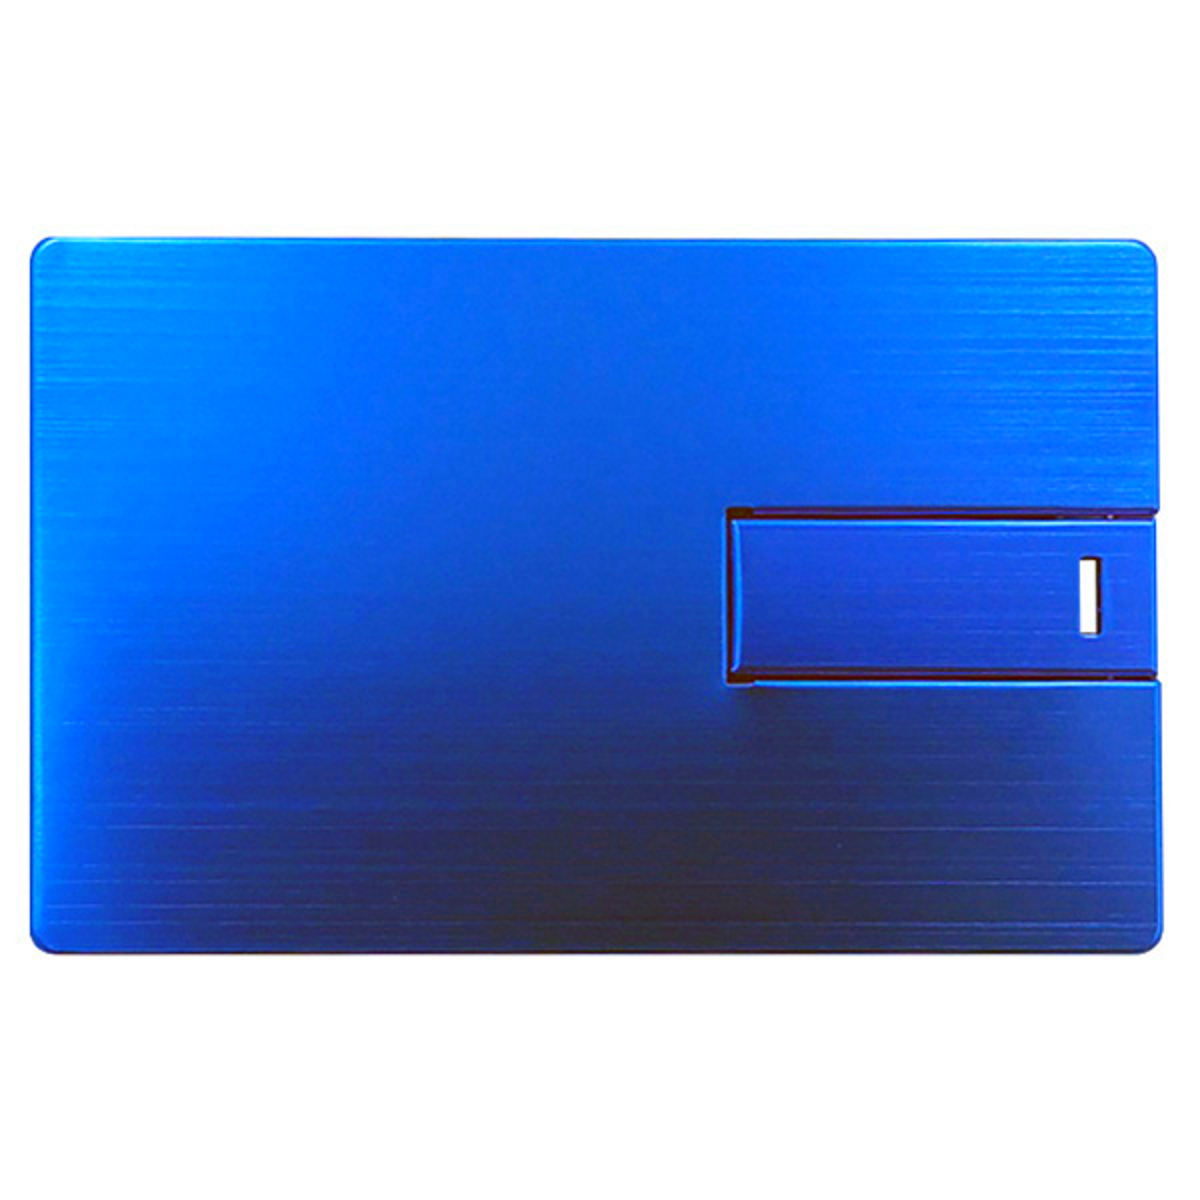 USB GERMANY ® (Blau, Metall-Kreditkarte GB) USB-Stick 1